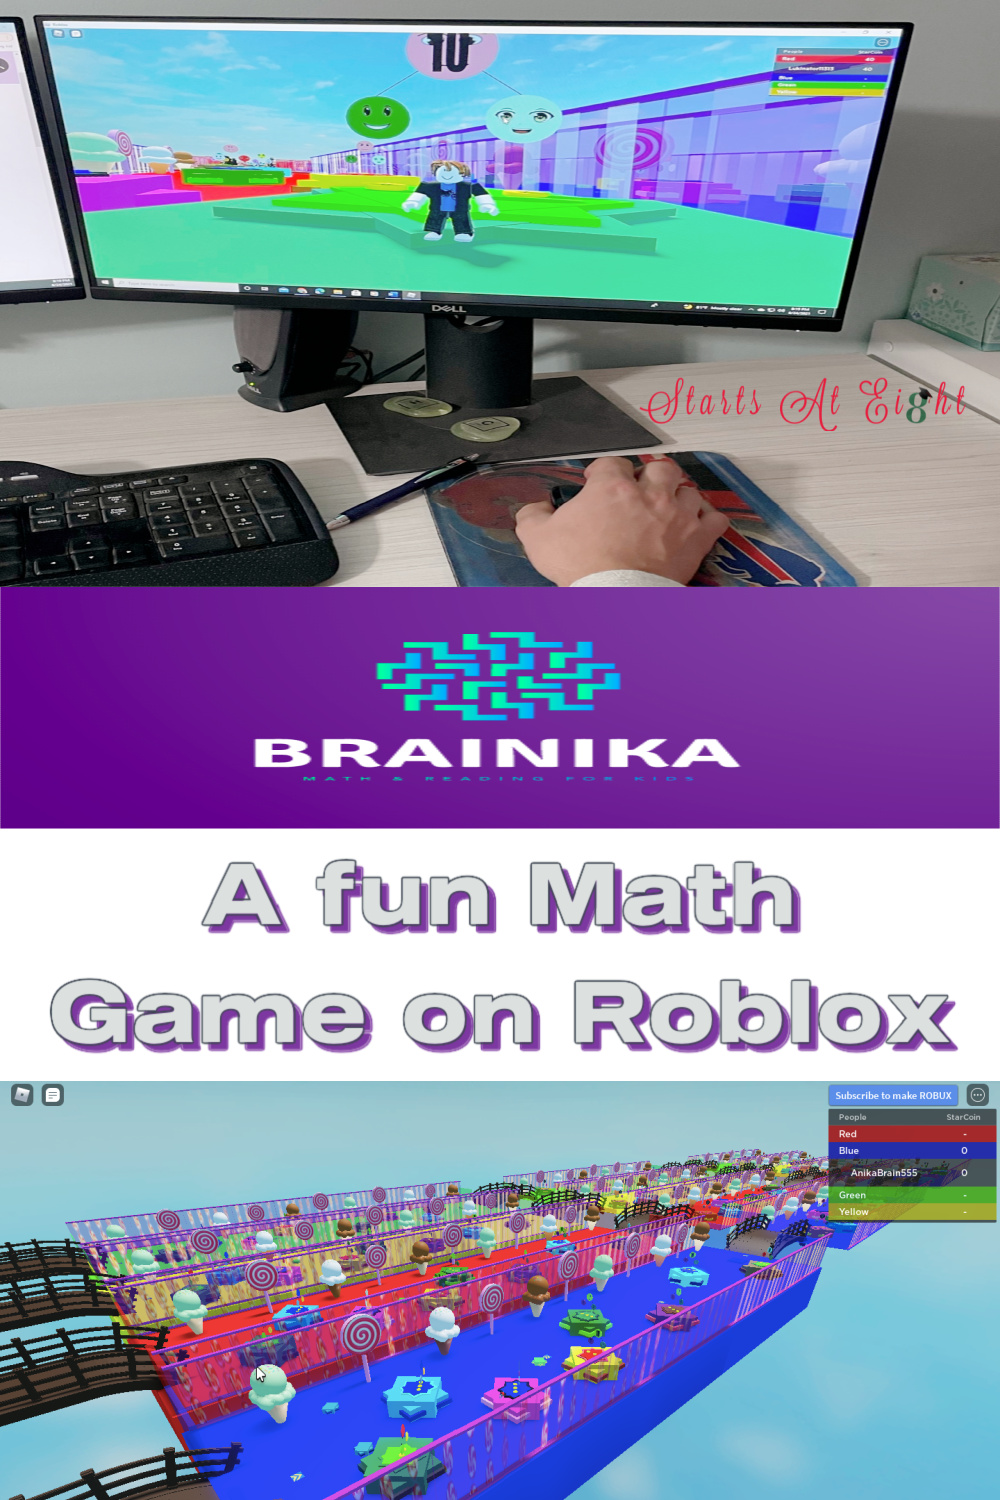 Super Fun Math Games for Kids by Brainika on Roblox